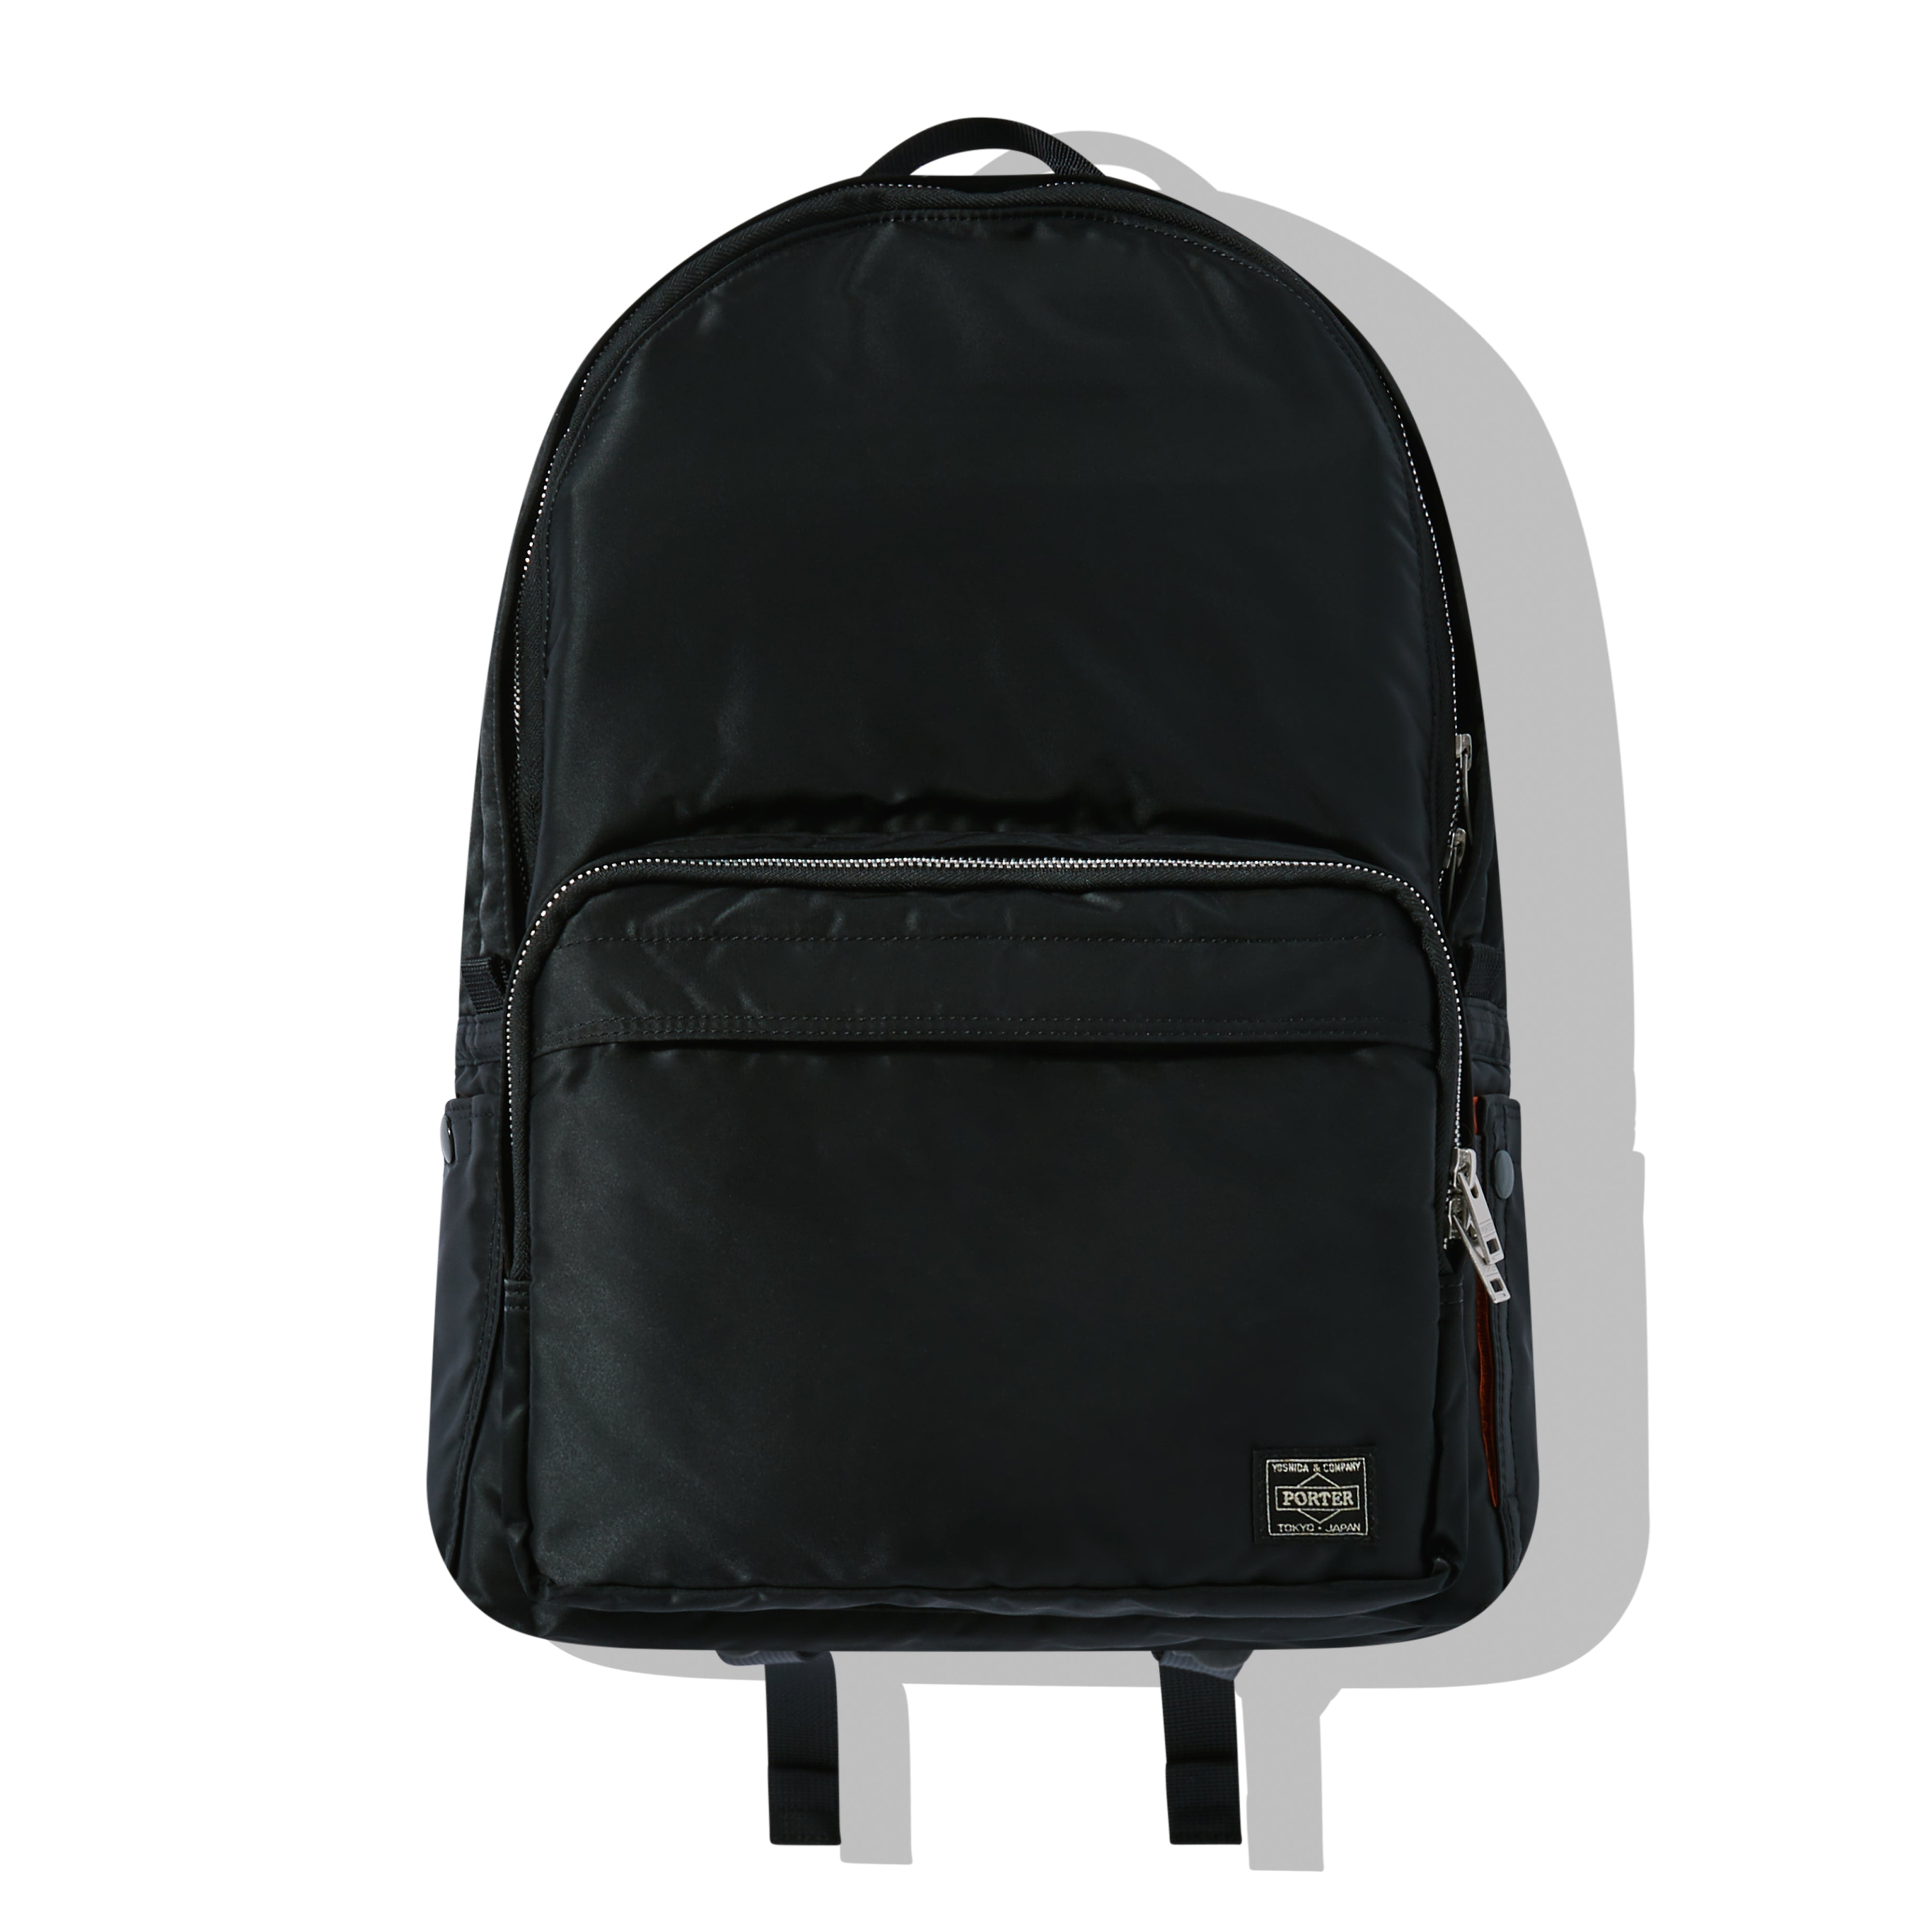 Porter-Yoshida u0026 Co. - Tanker Backpack - (Black)